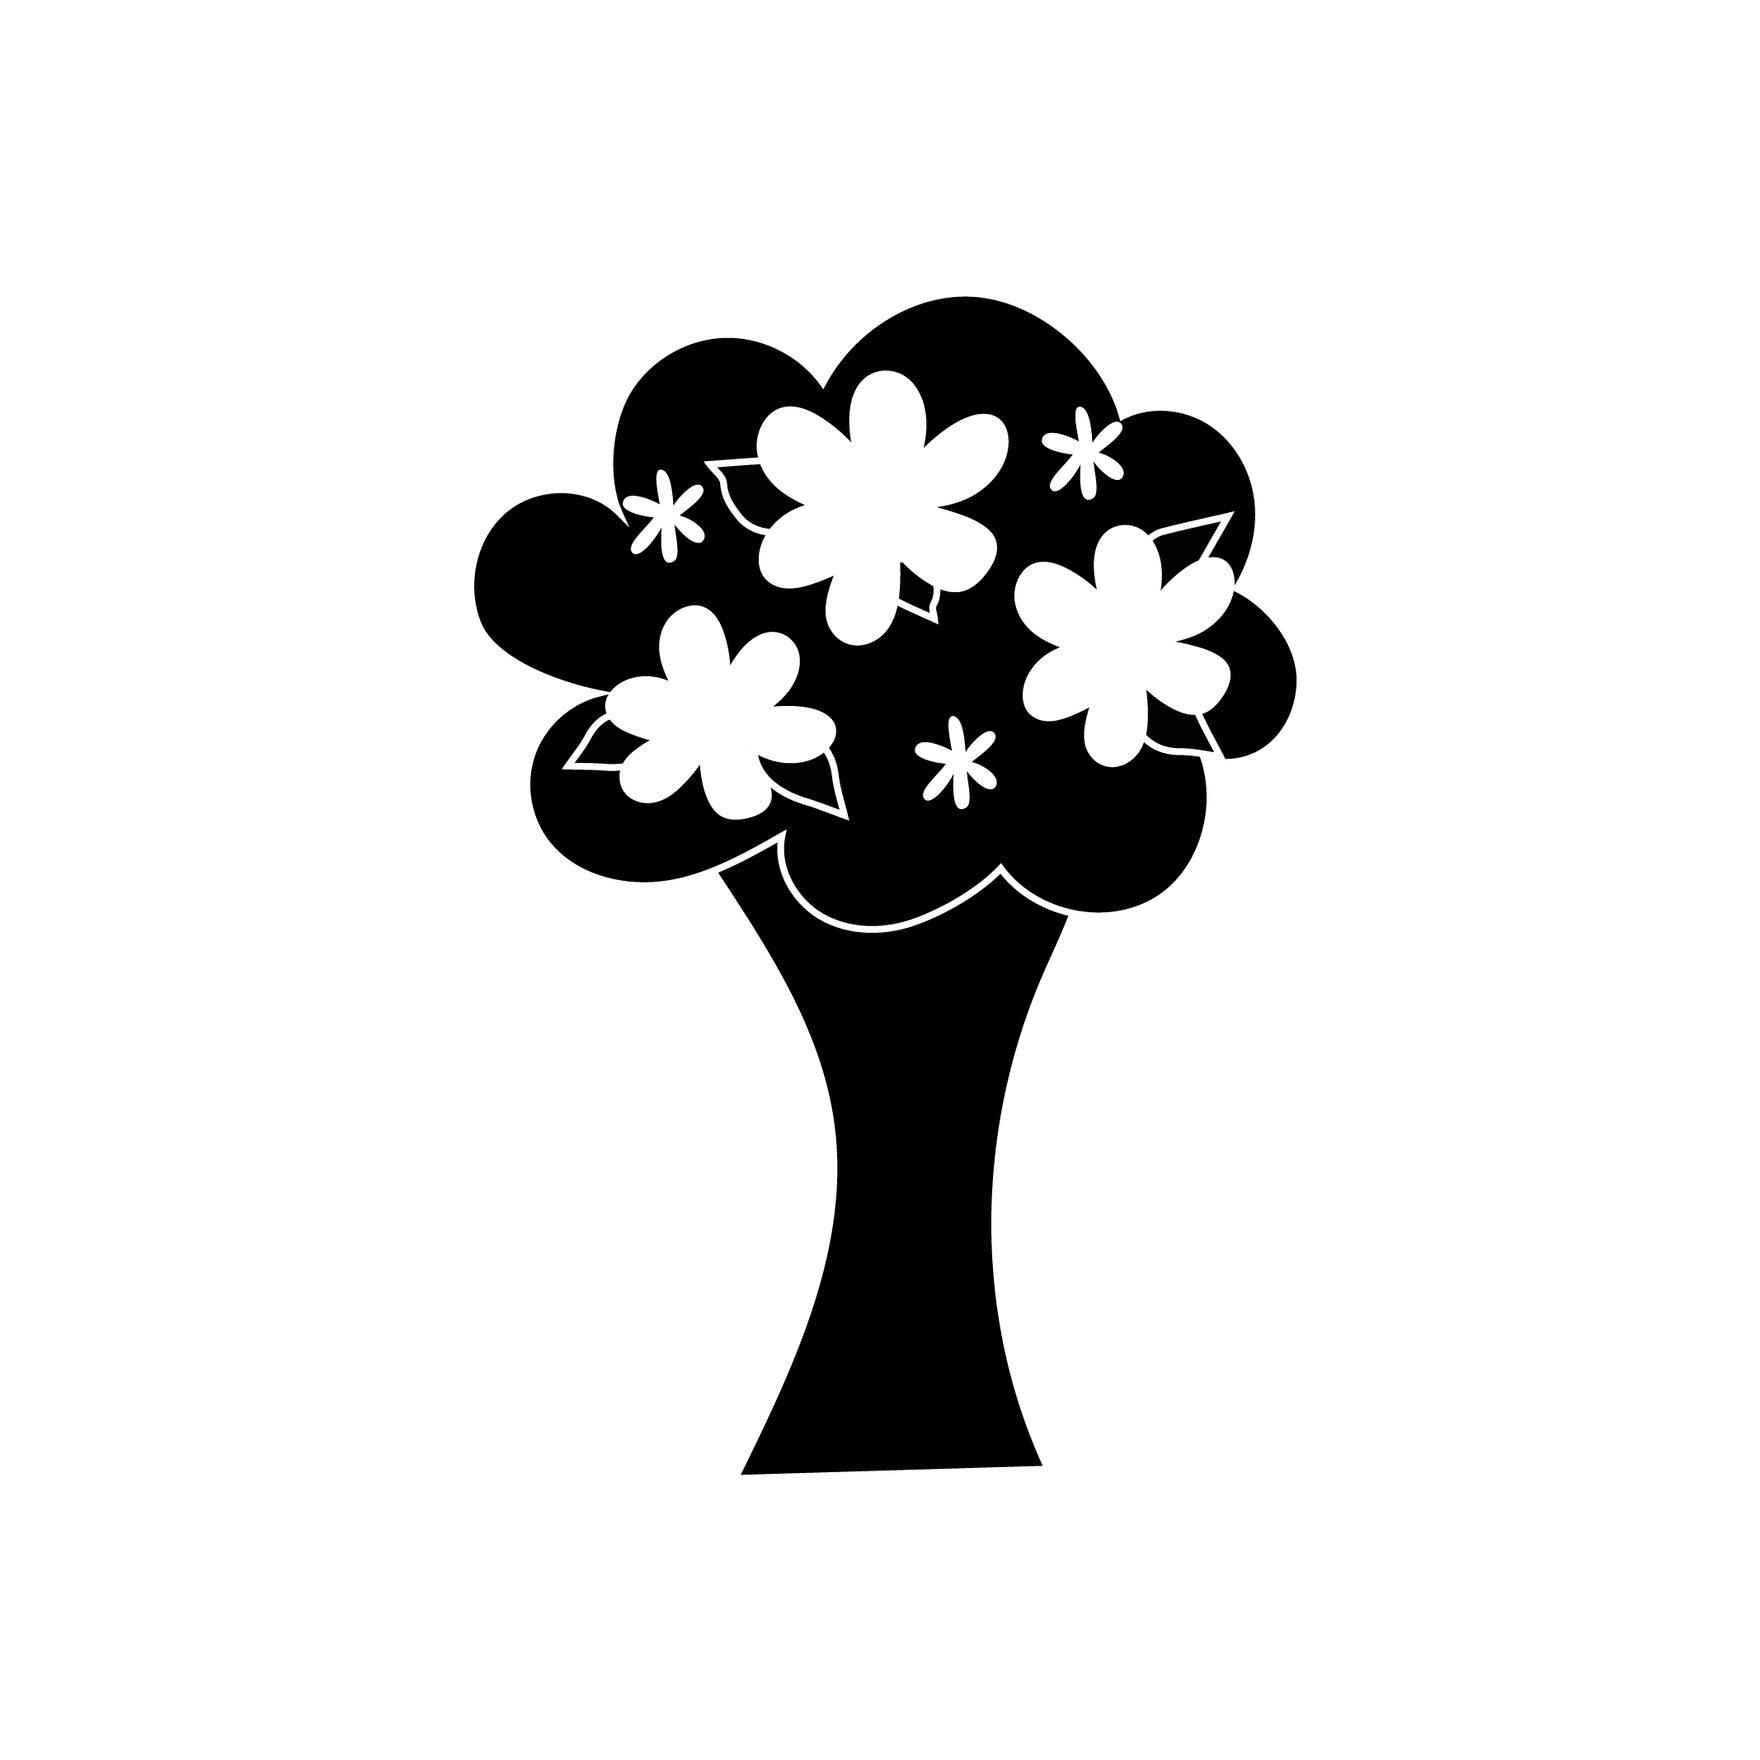 Free Wedding Flower Silhouette in Illustrator, EPS, SVG, JPG, PNG